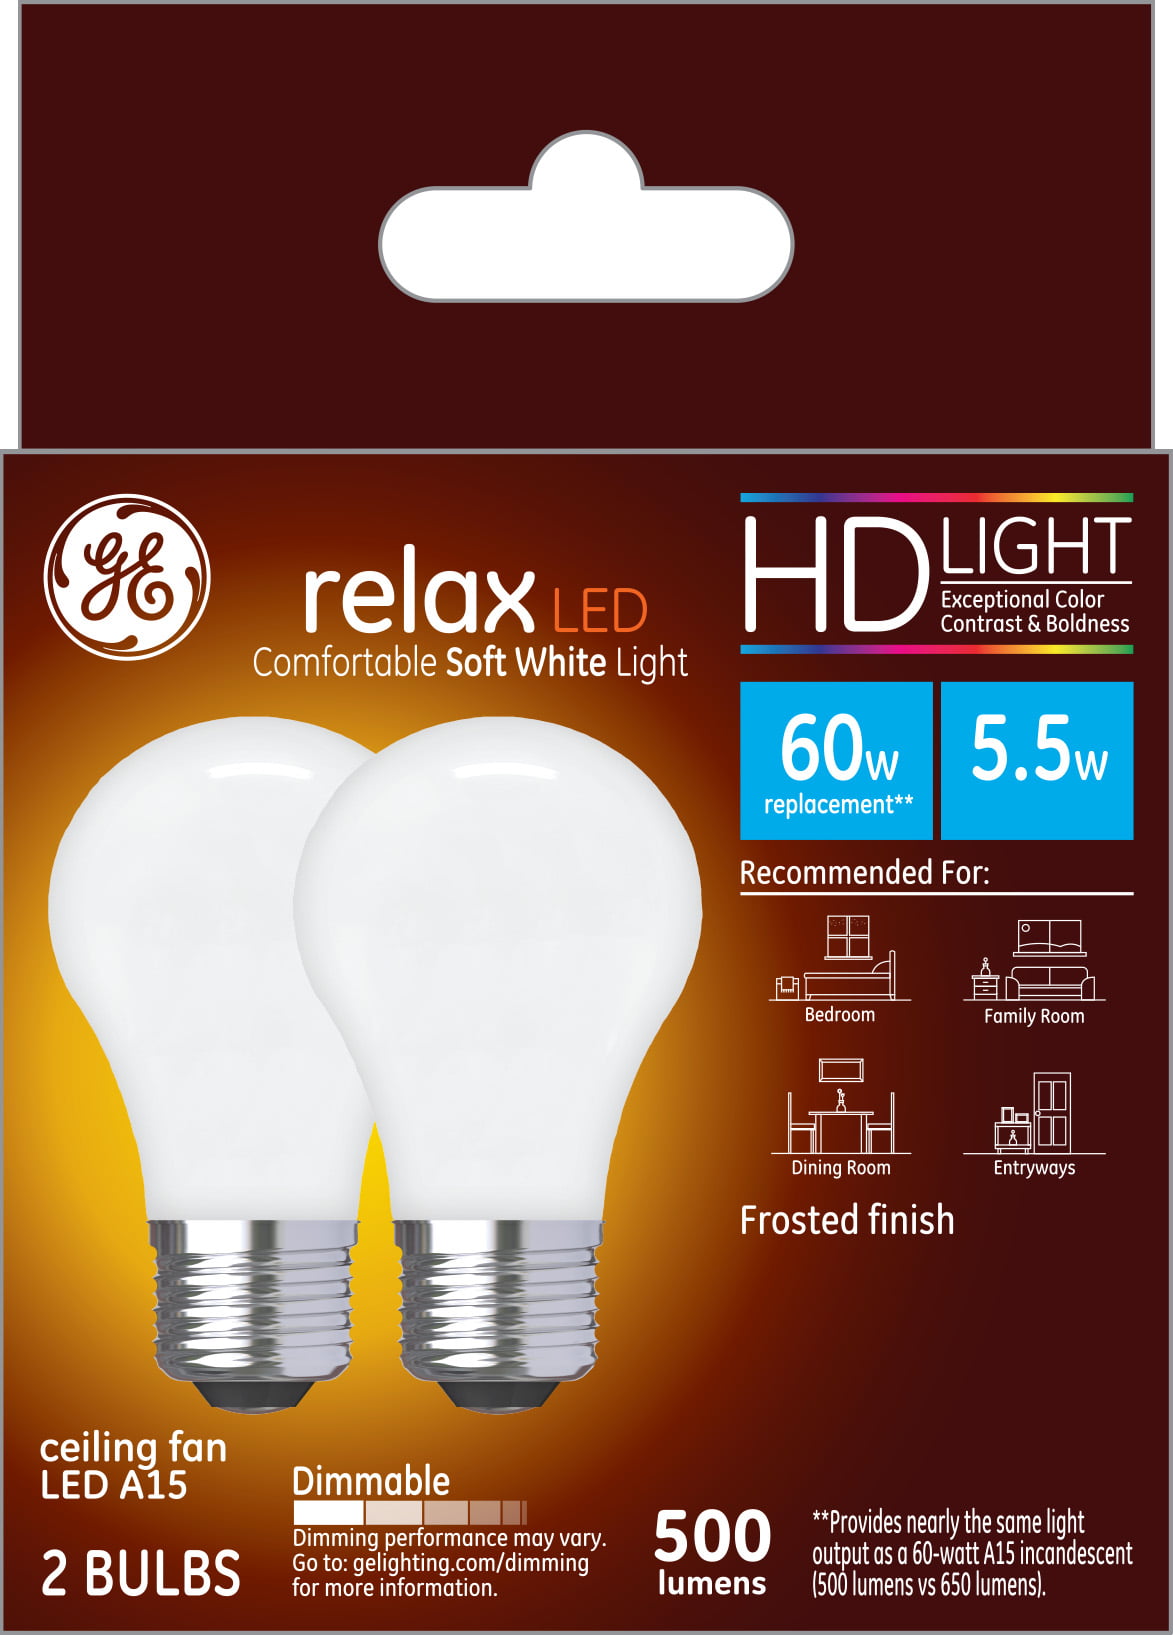 GE LED HD light Refresh Soft White 60w replacement bulb dimmable 2 pk 2700K watt 